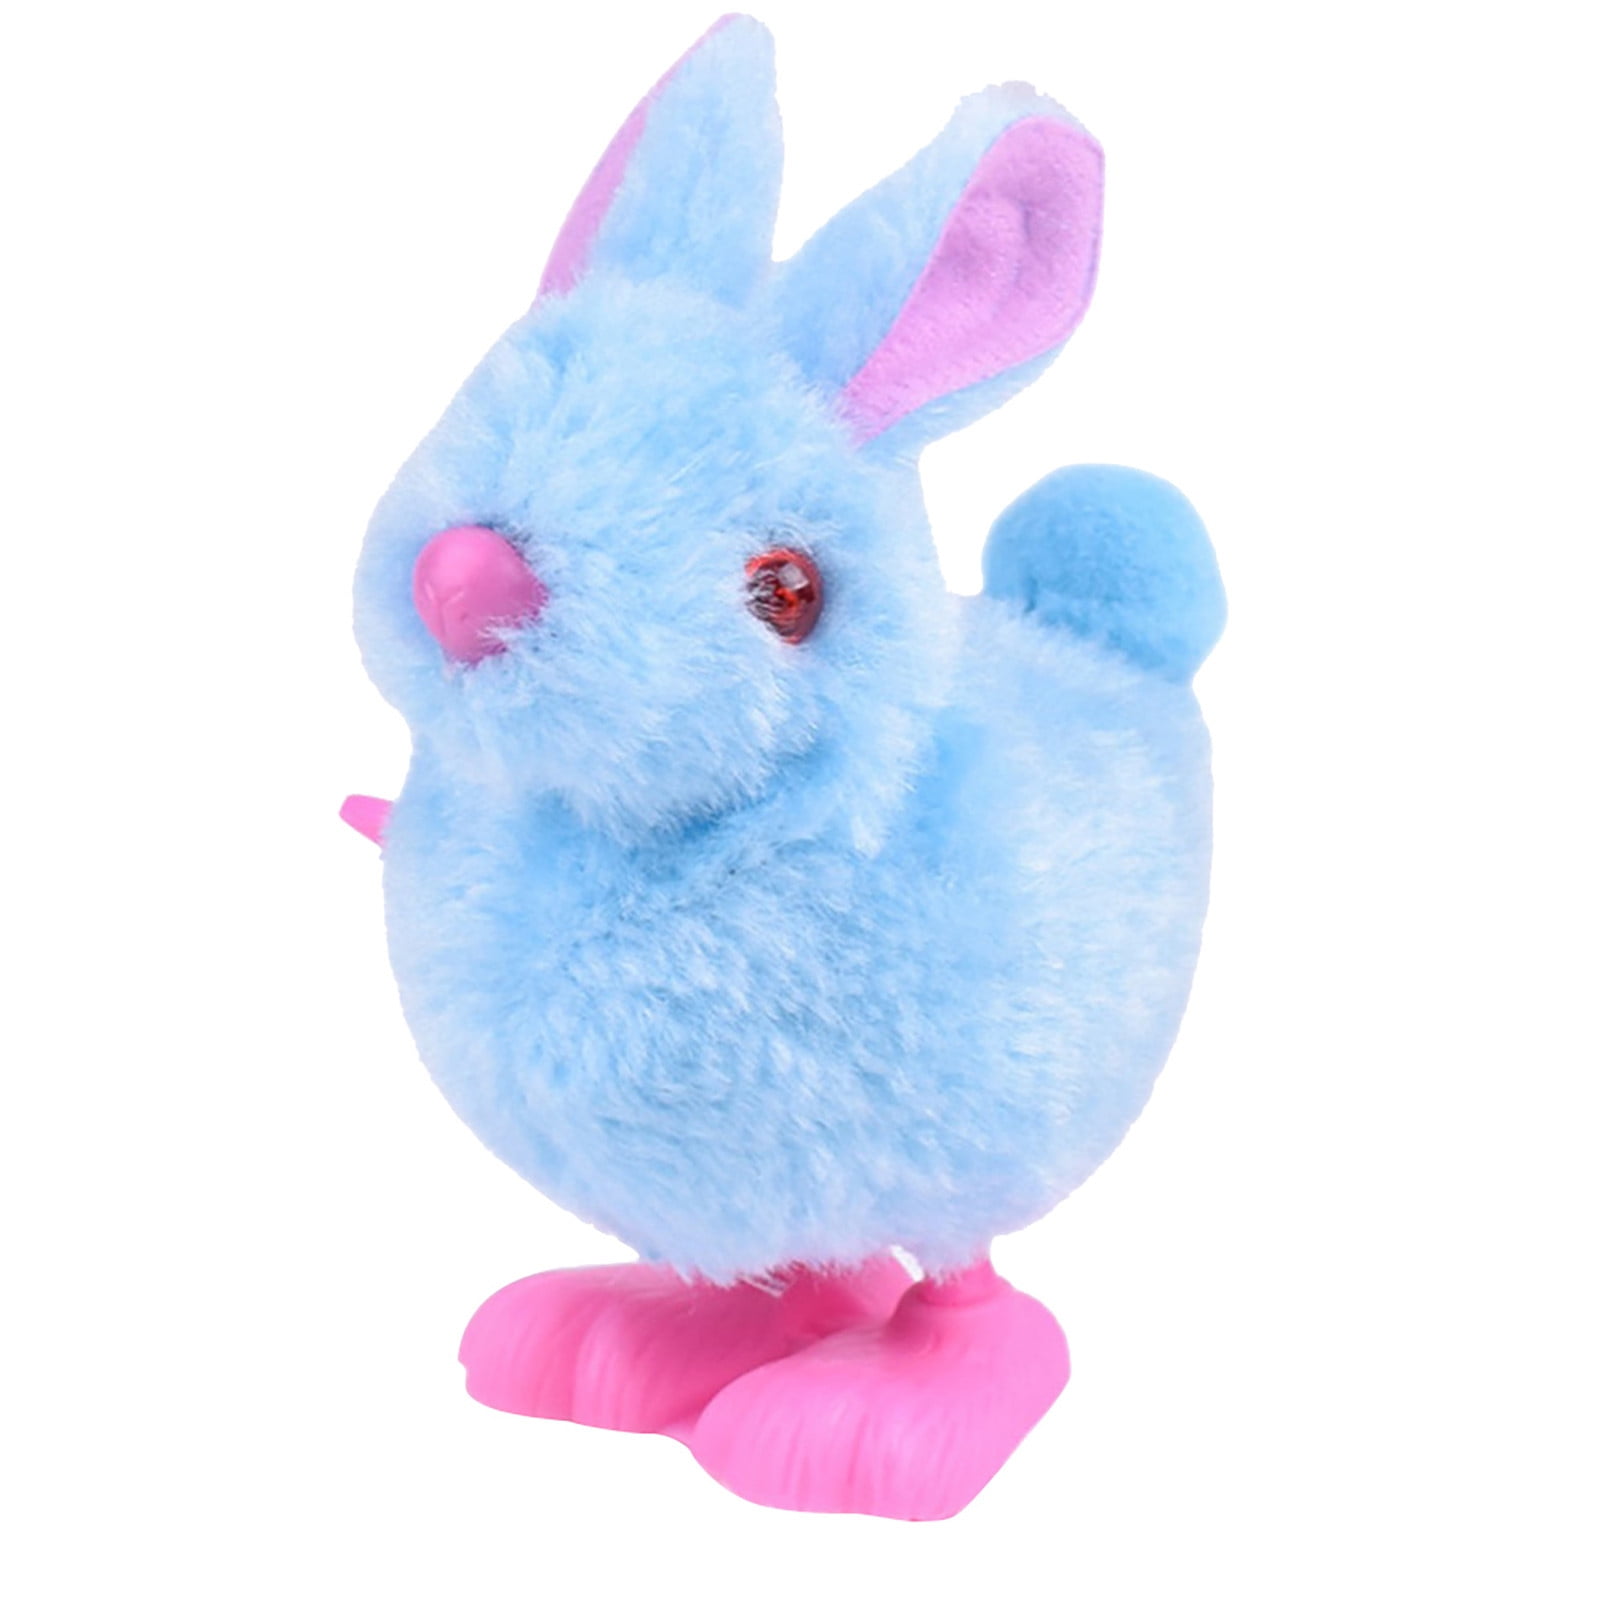 New Cute Soft Plush Toys Stuffed Animal Infant Children Gift Animals Doll BT3 